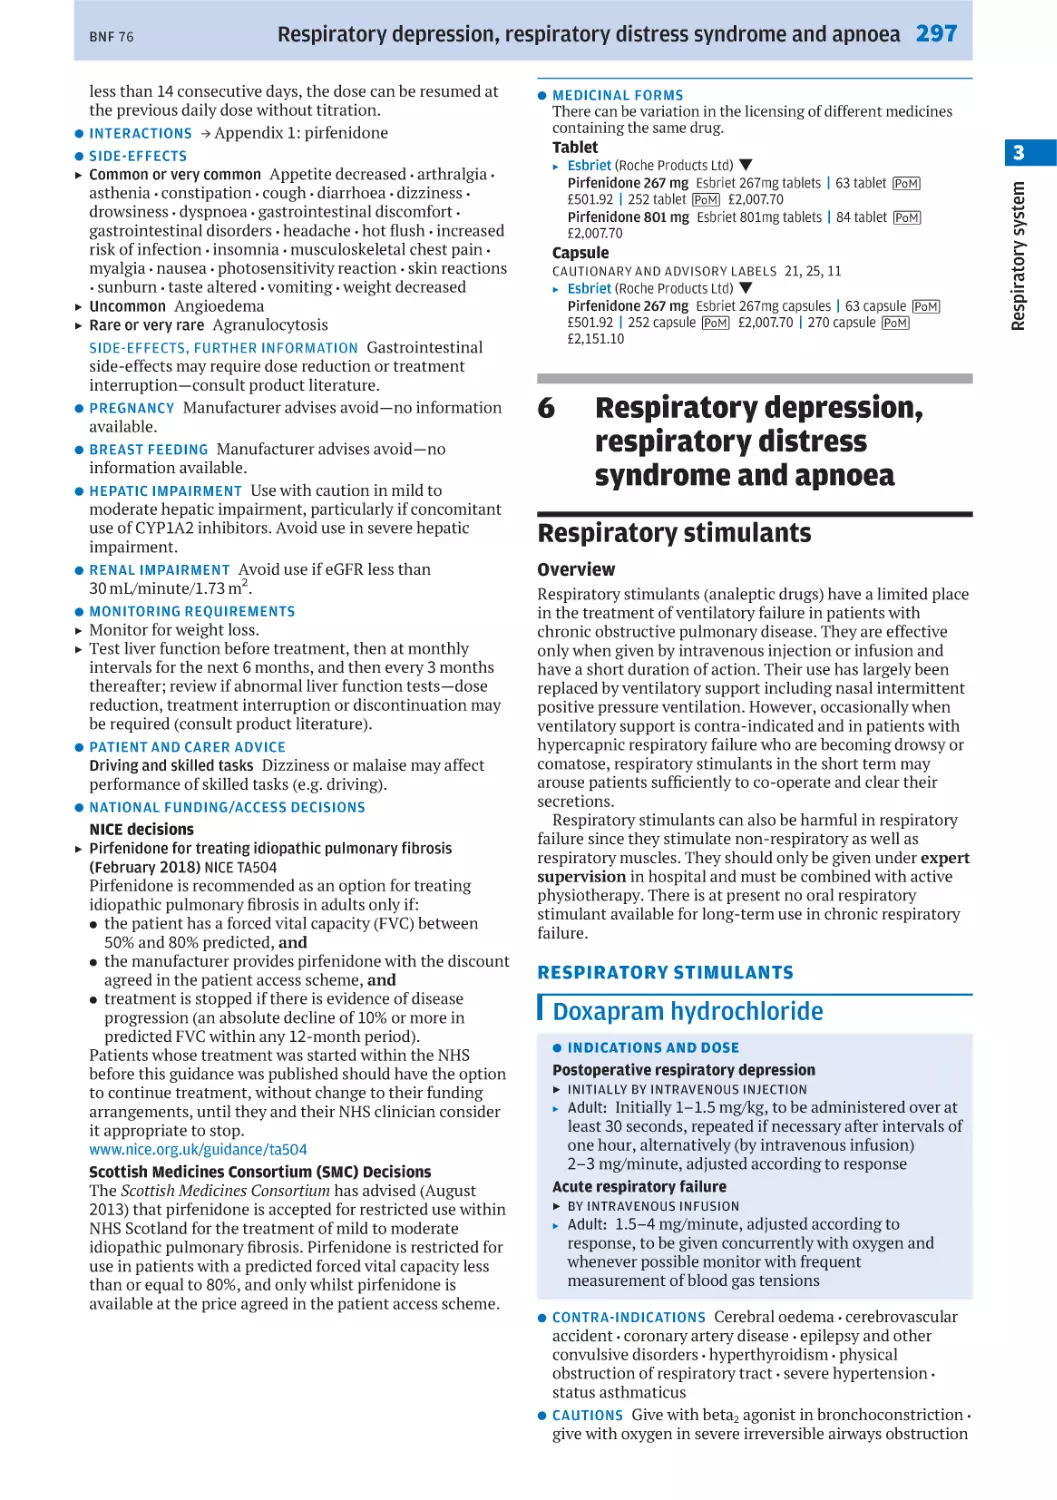 Respiratory depression, respiratory distress syndrome and apnoea